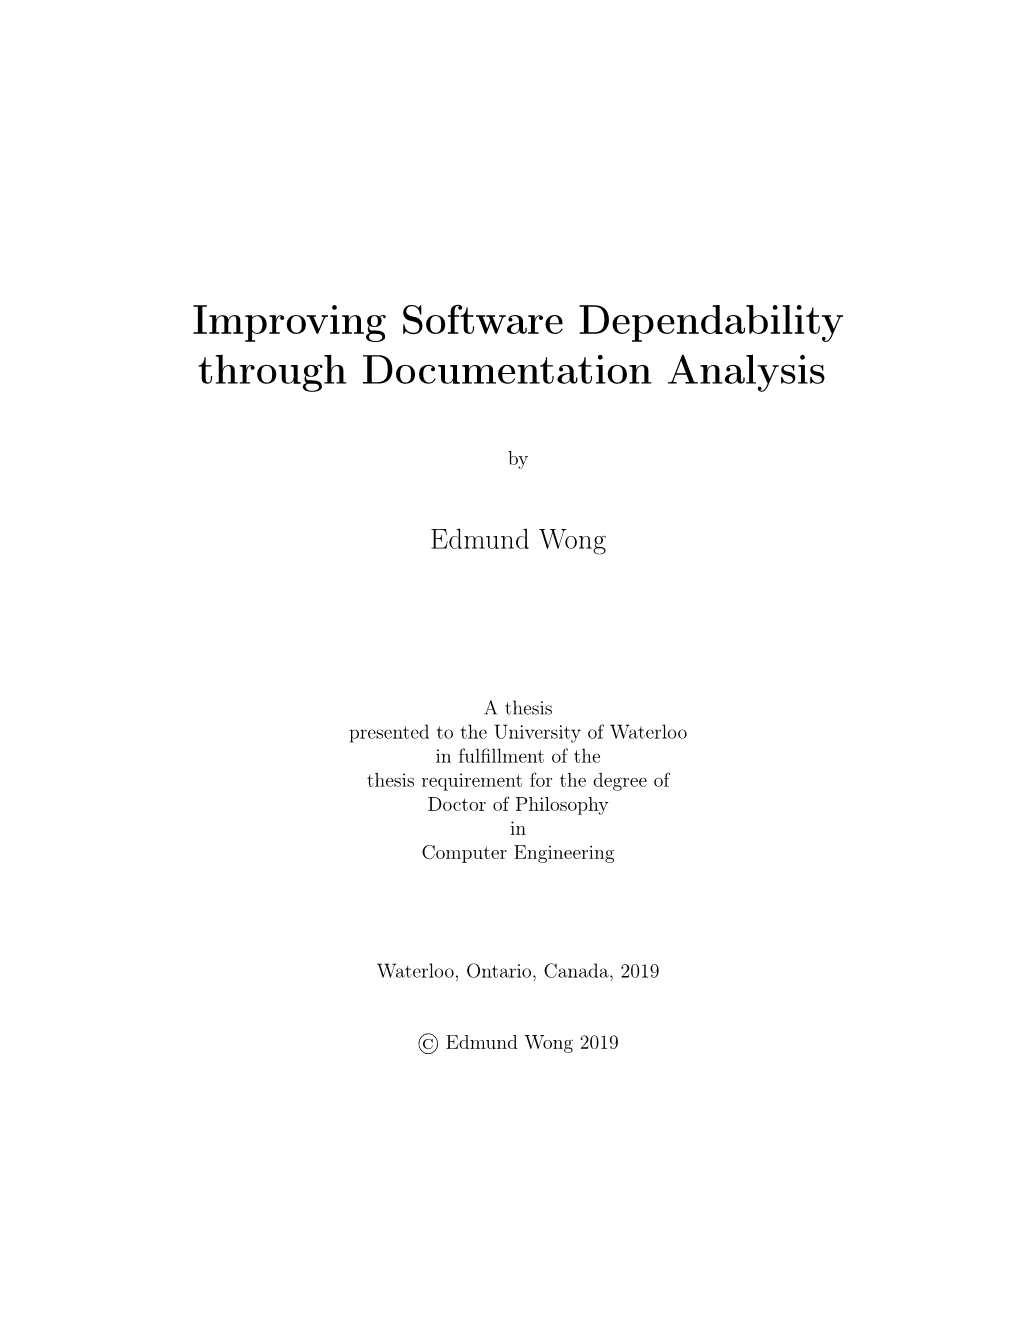 Improving Software Dependability Through Documentation Analysis